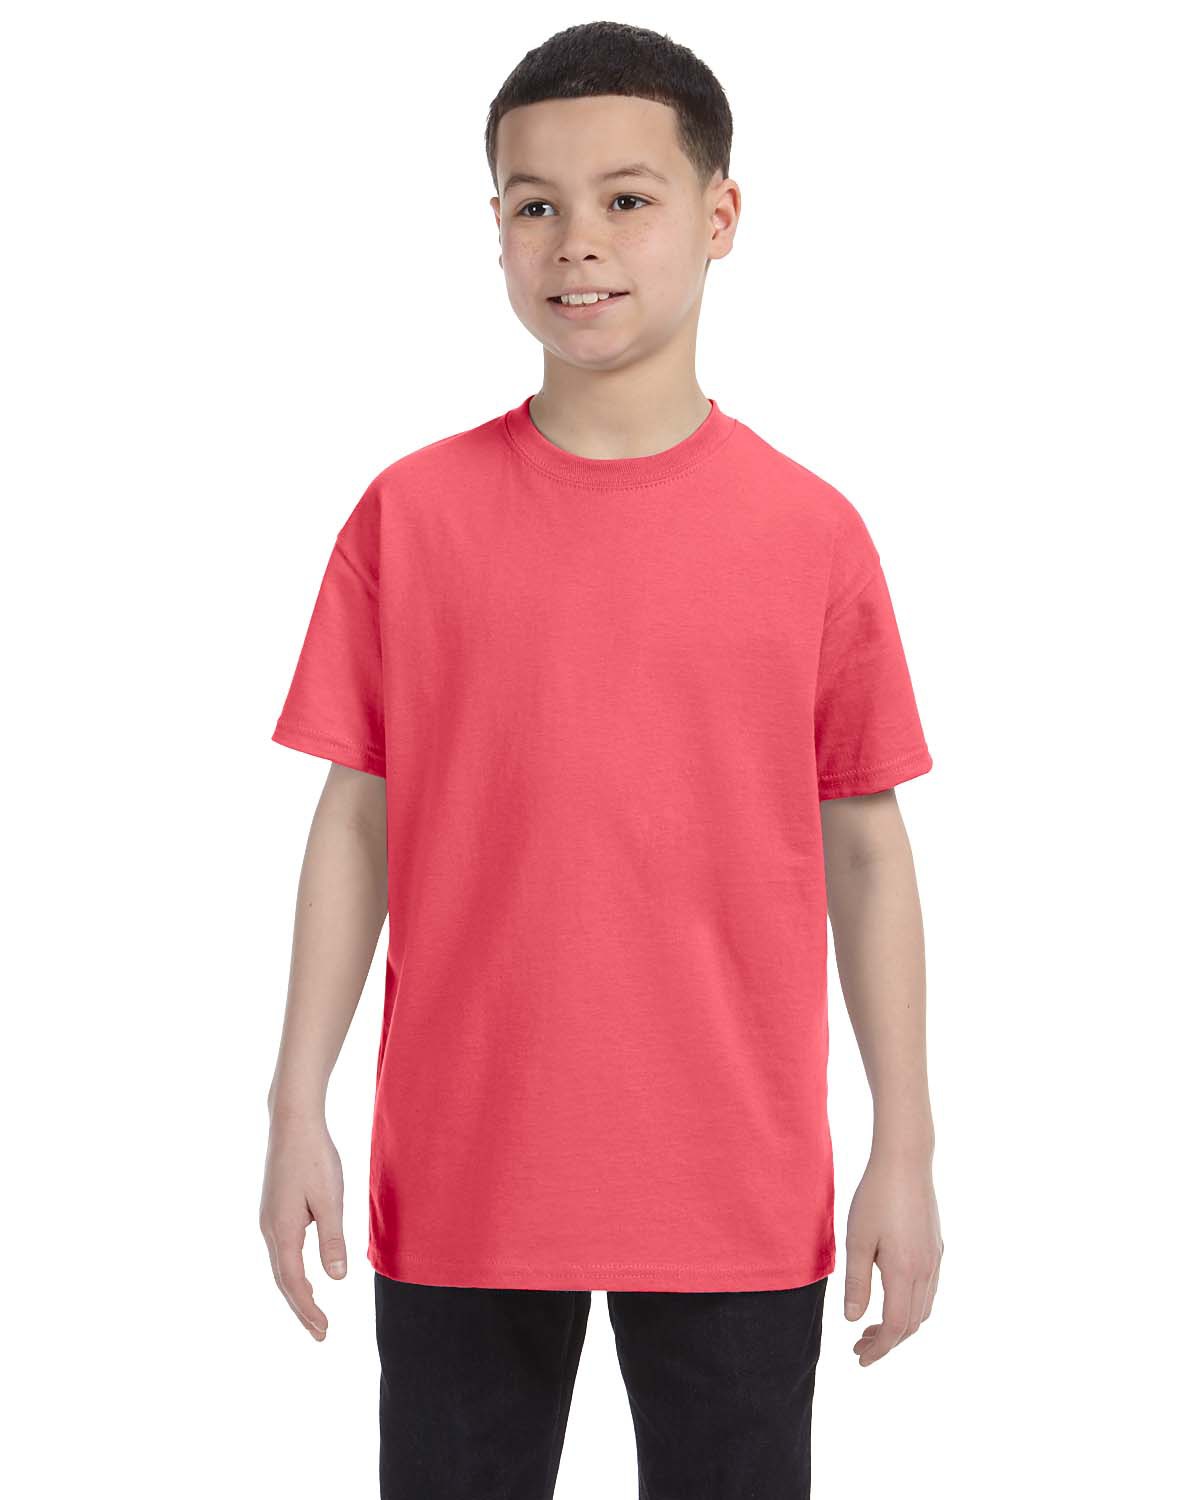 Gildan T-Shirt Youth Size Large Ultra Cotton Plain Crewneck Safety Pink NWT 